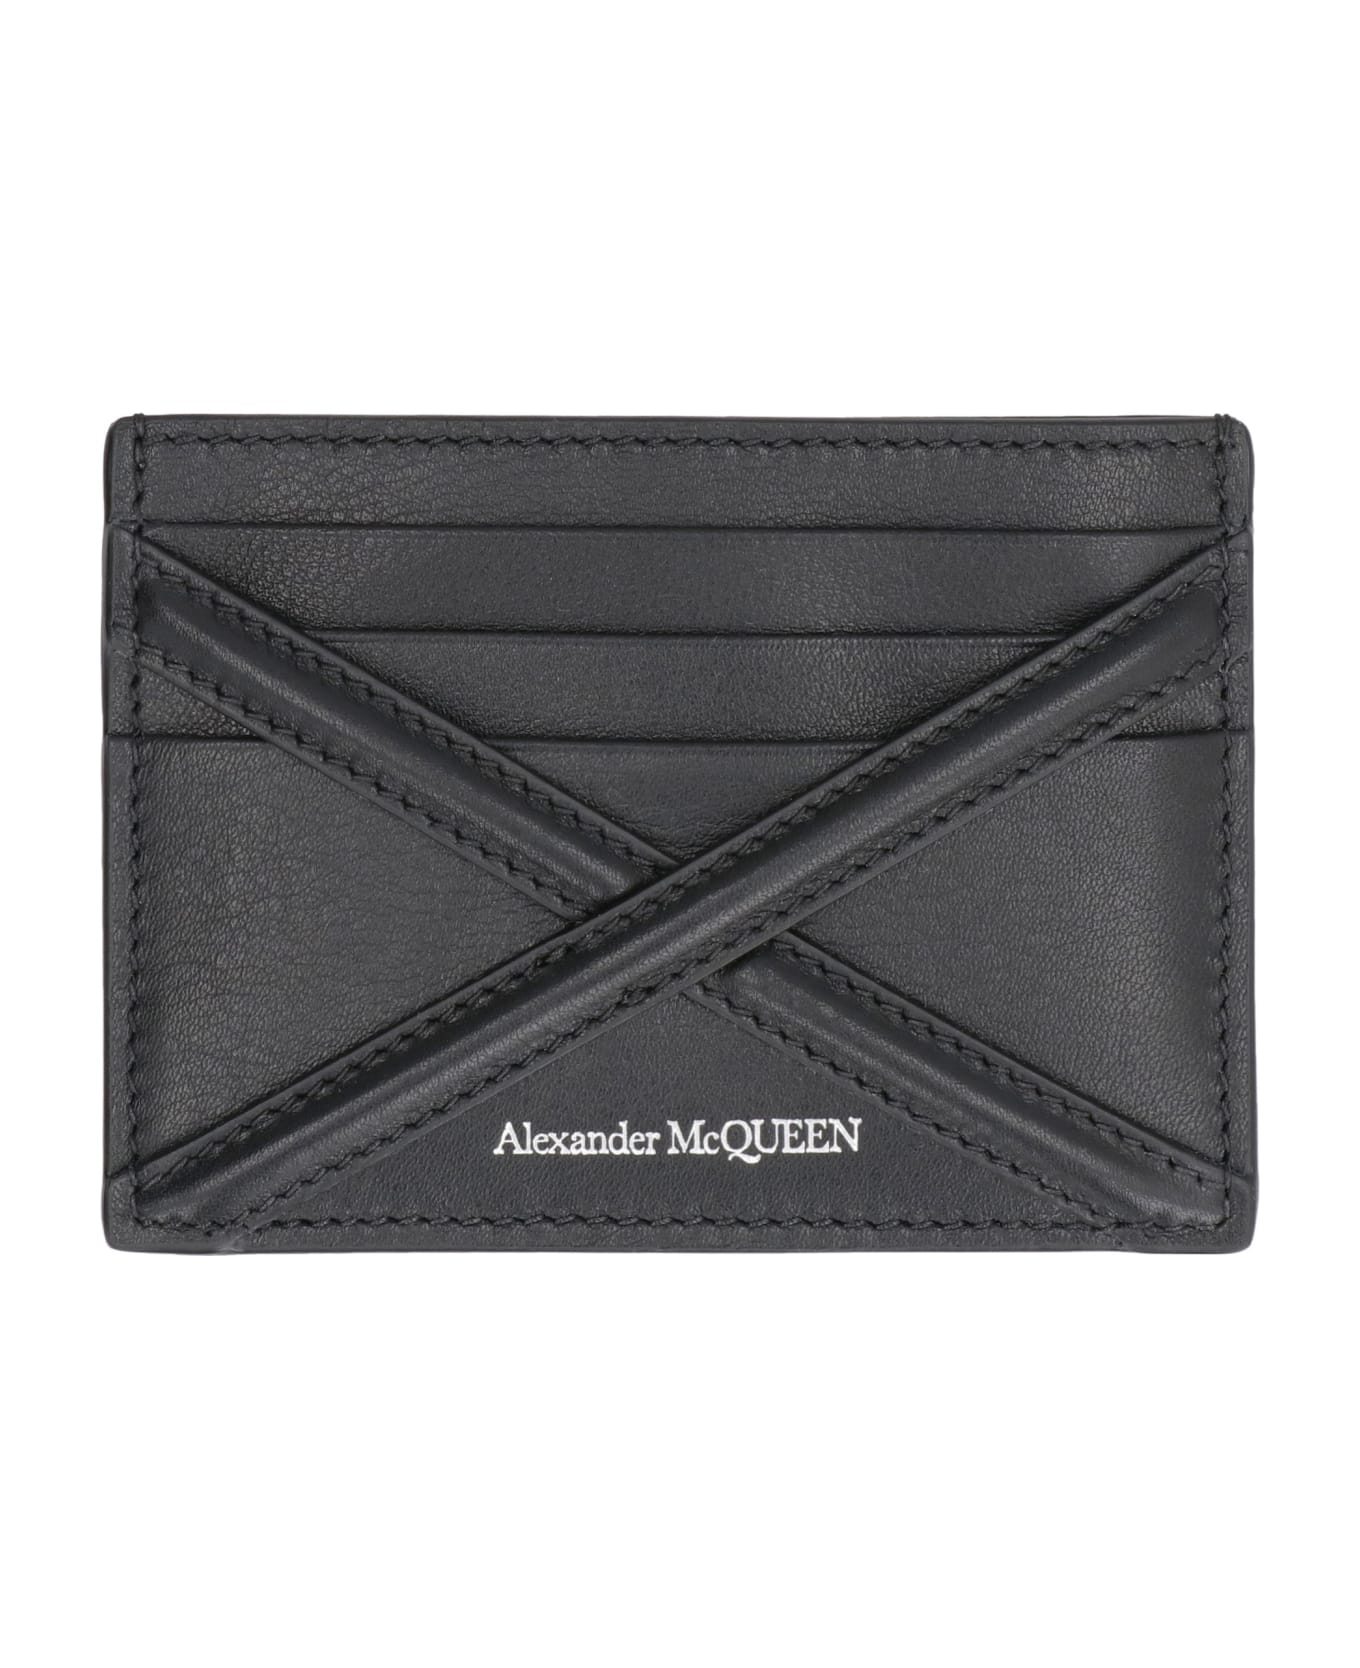 Alexander McQueen Leather Card Holder - black 財布